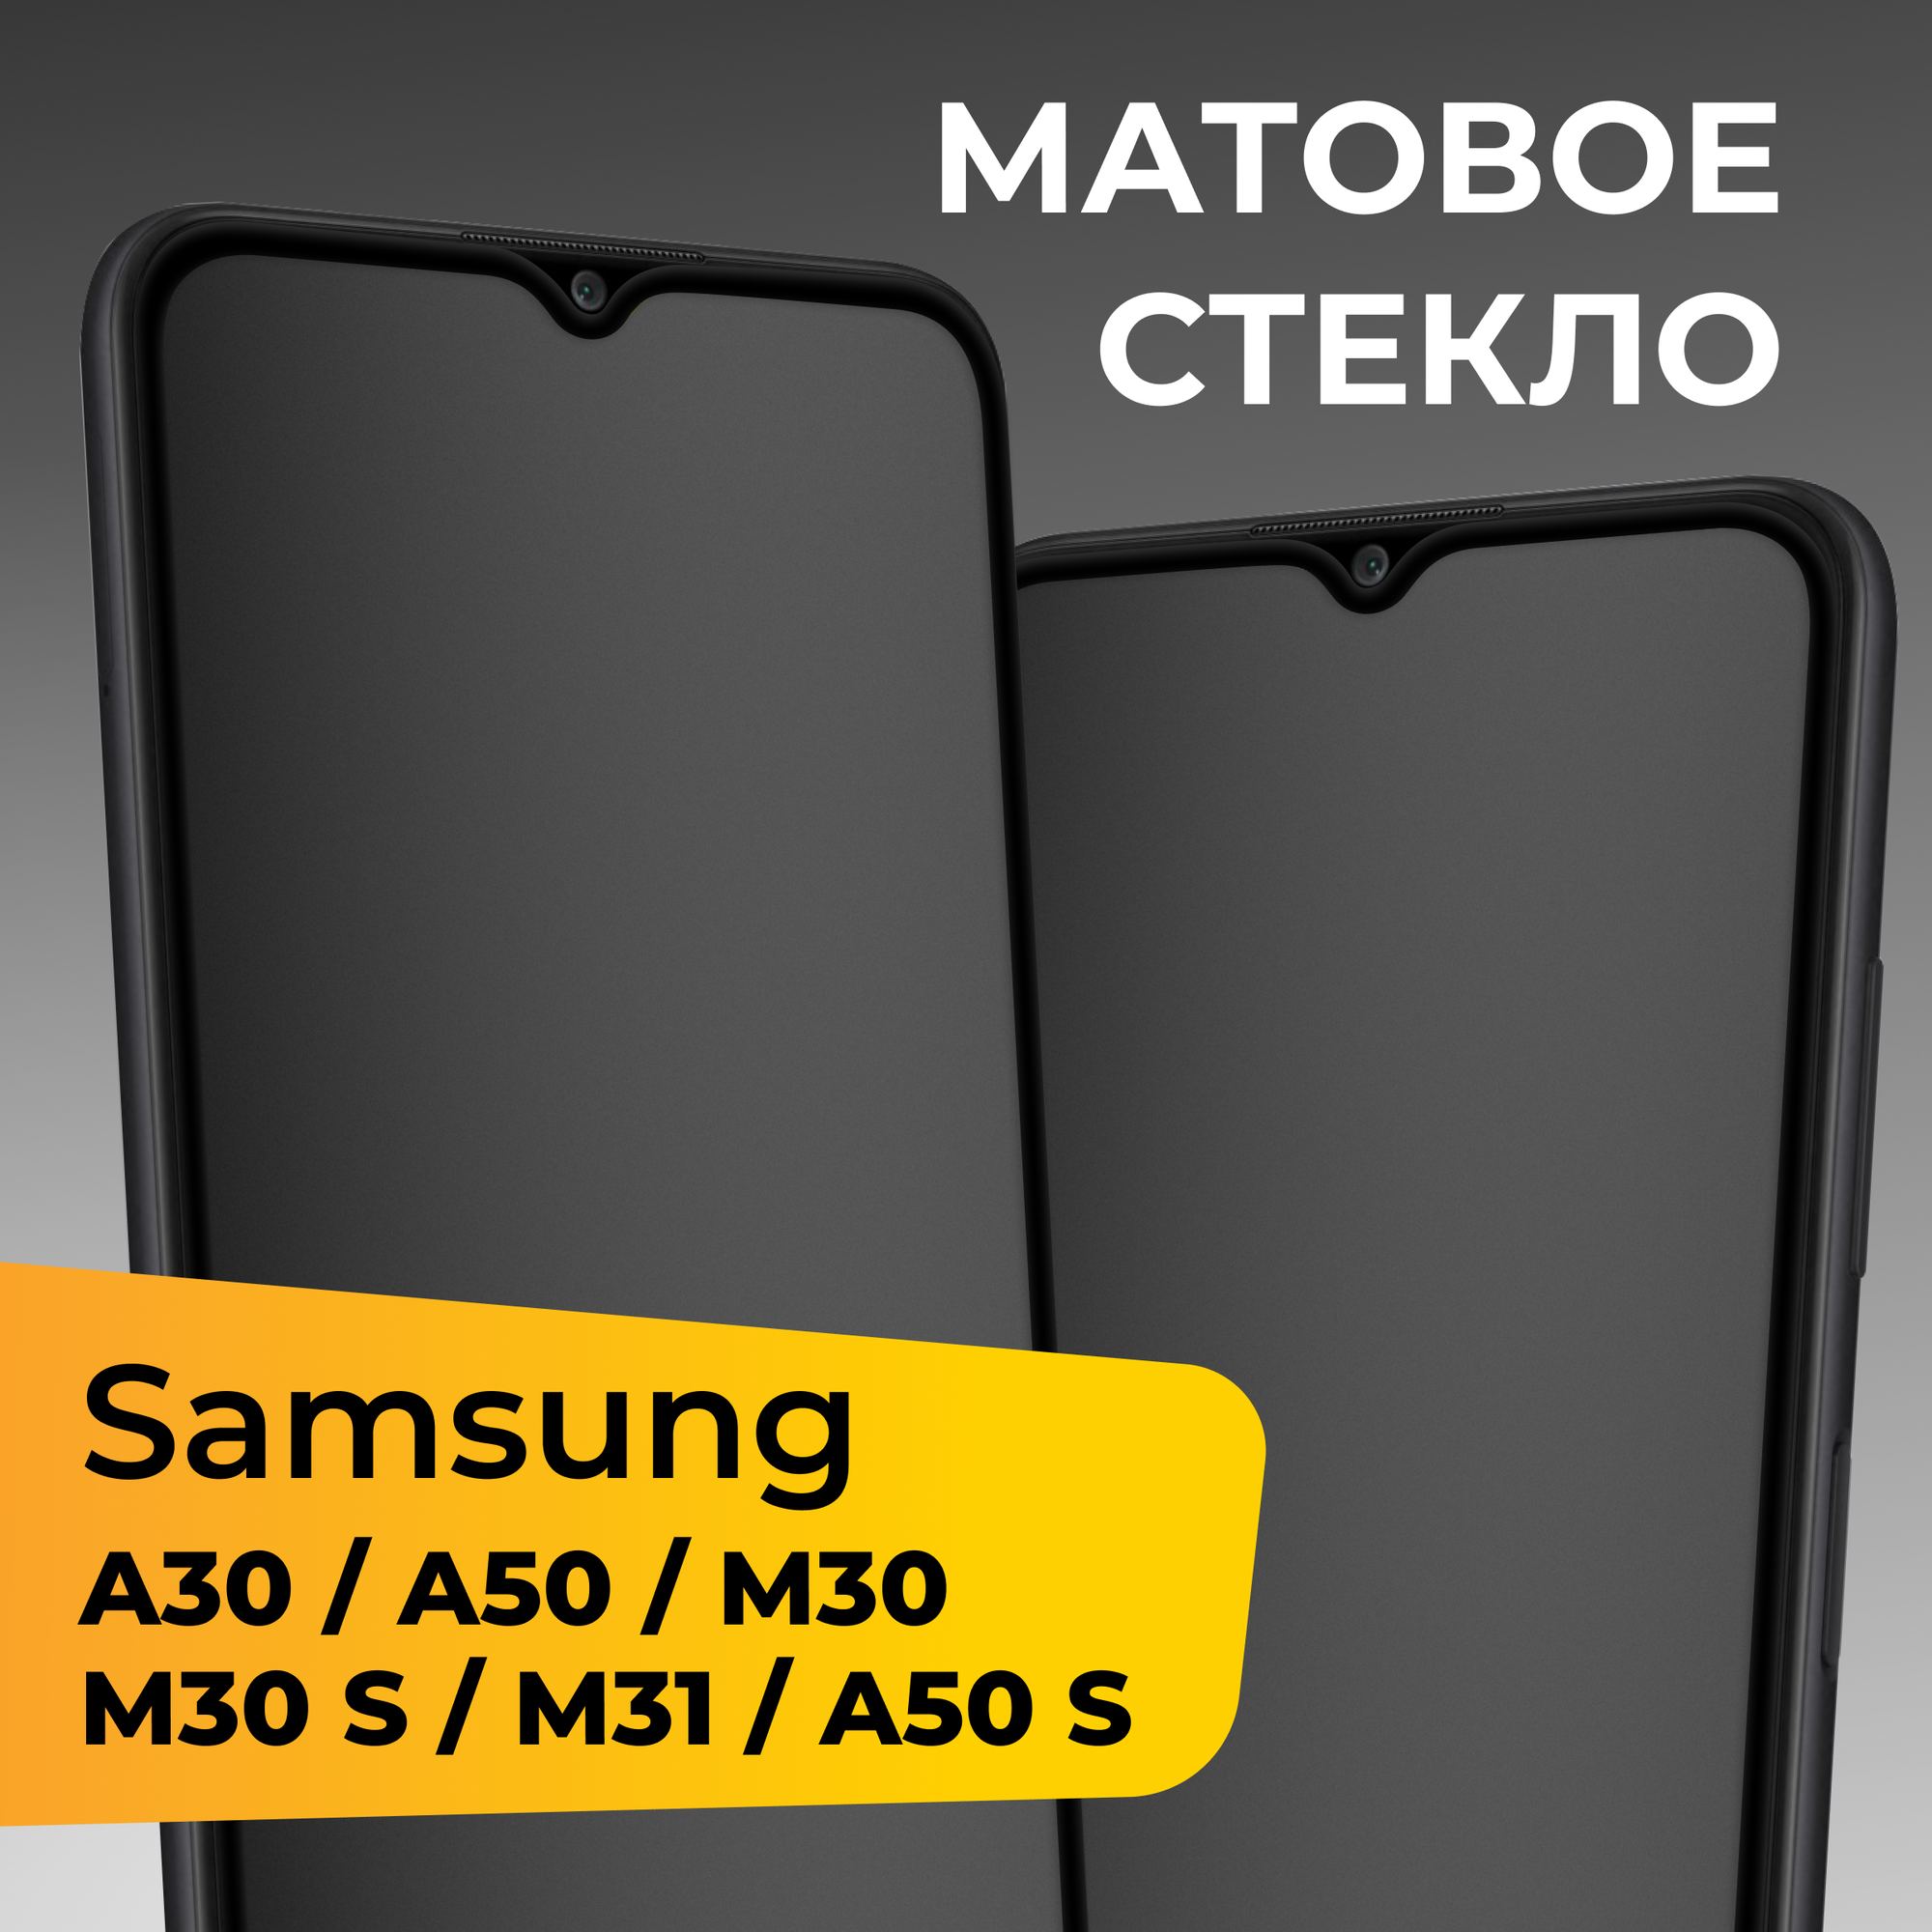 Матовое защитное стекло для телефона Samsung Galaxy A30 A50 M30 M30S M31 и A50S / Стекло на Самсунг Галакси А30 А50 М30 М30С М31 и А50С